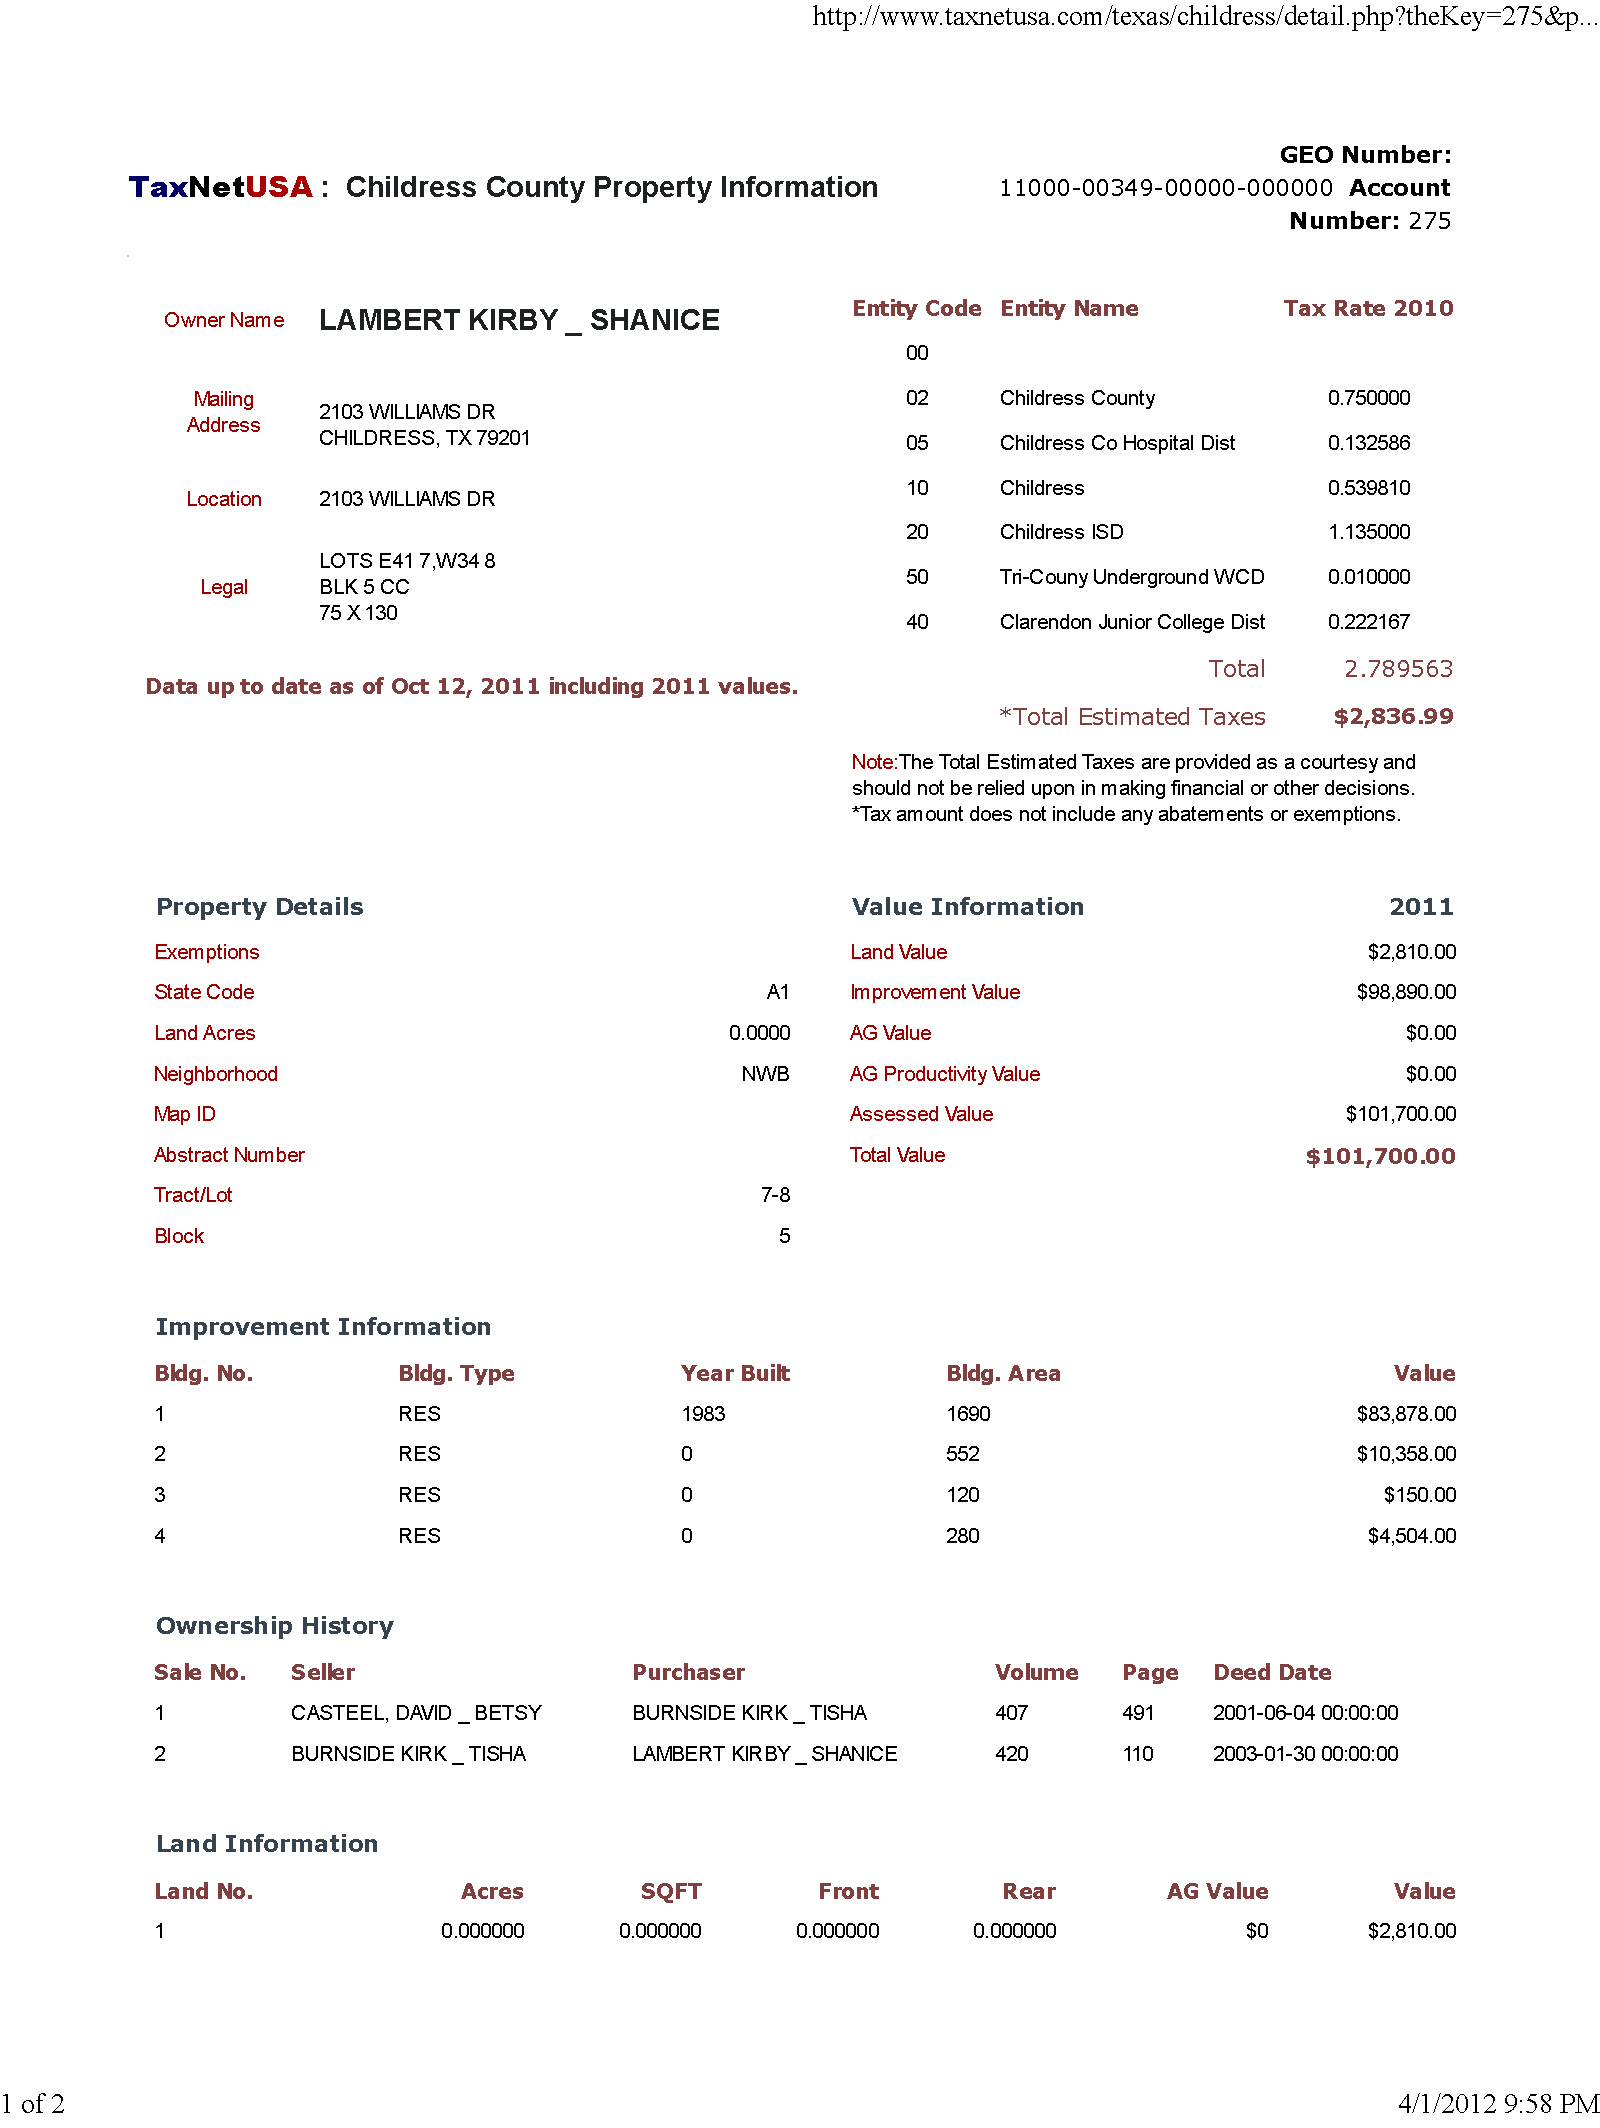 Copy of lambert shanice property tax info1.jpg